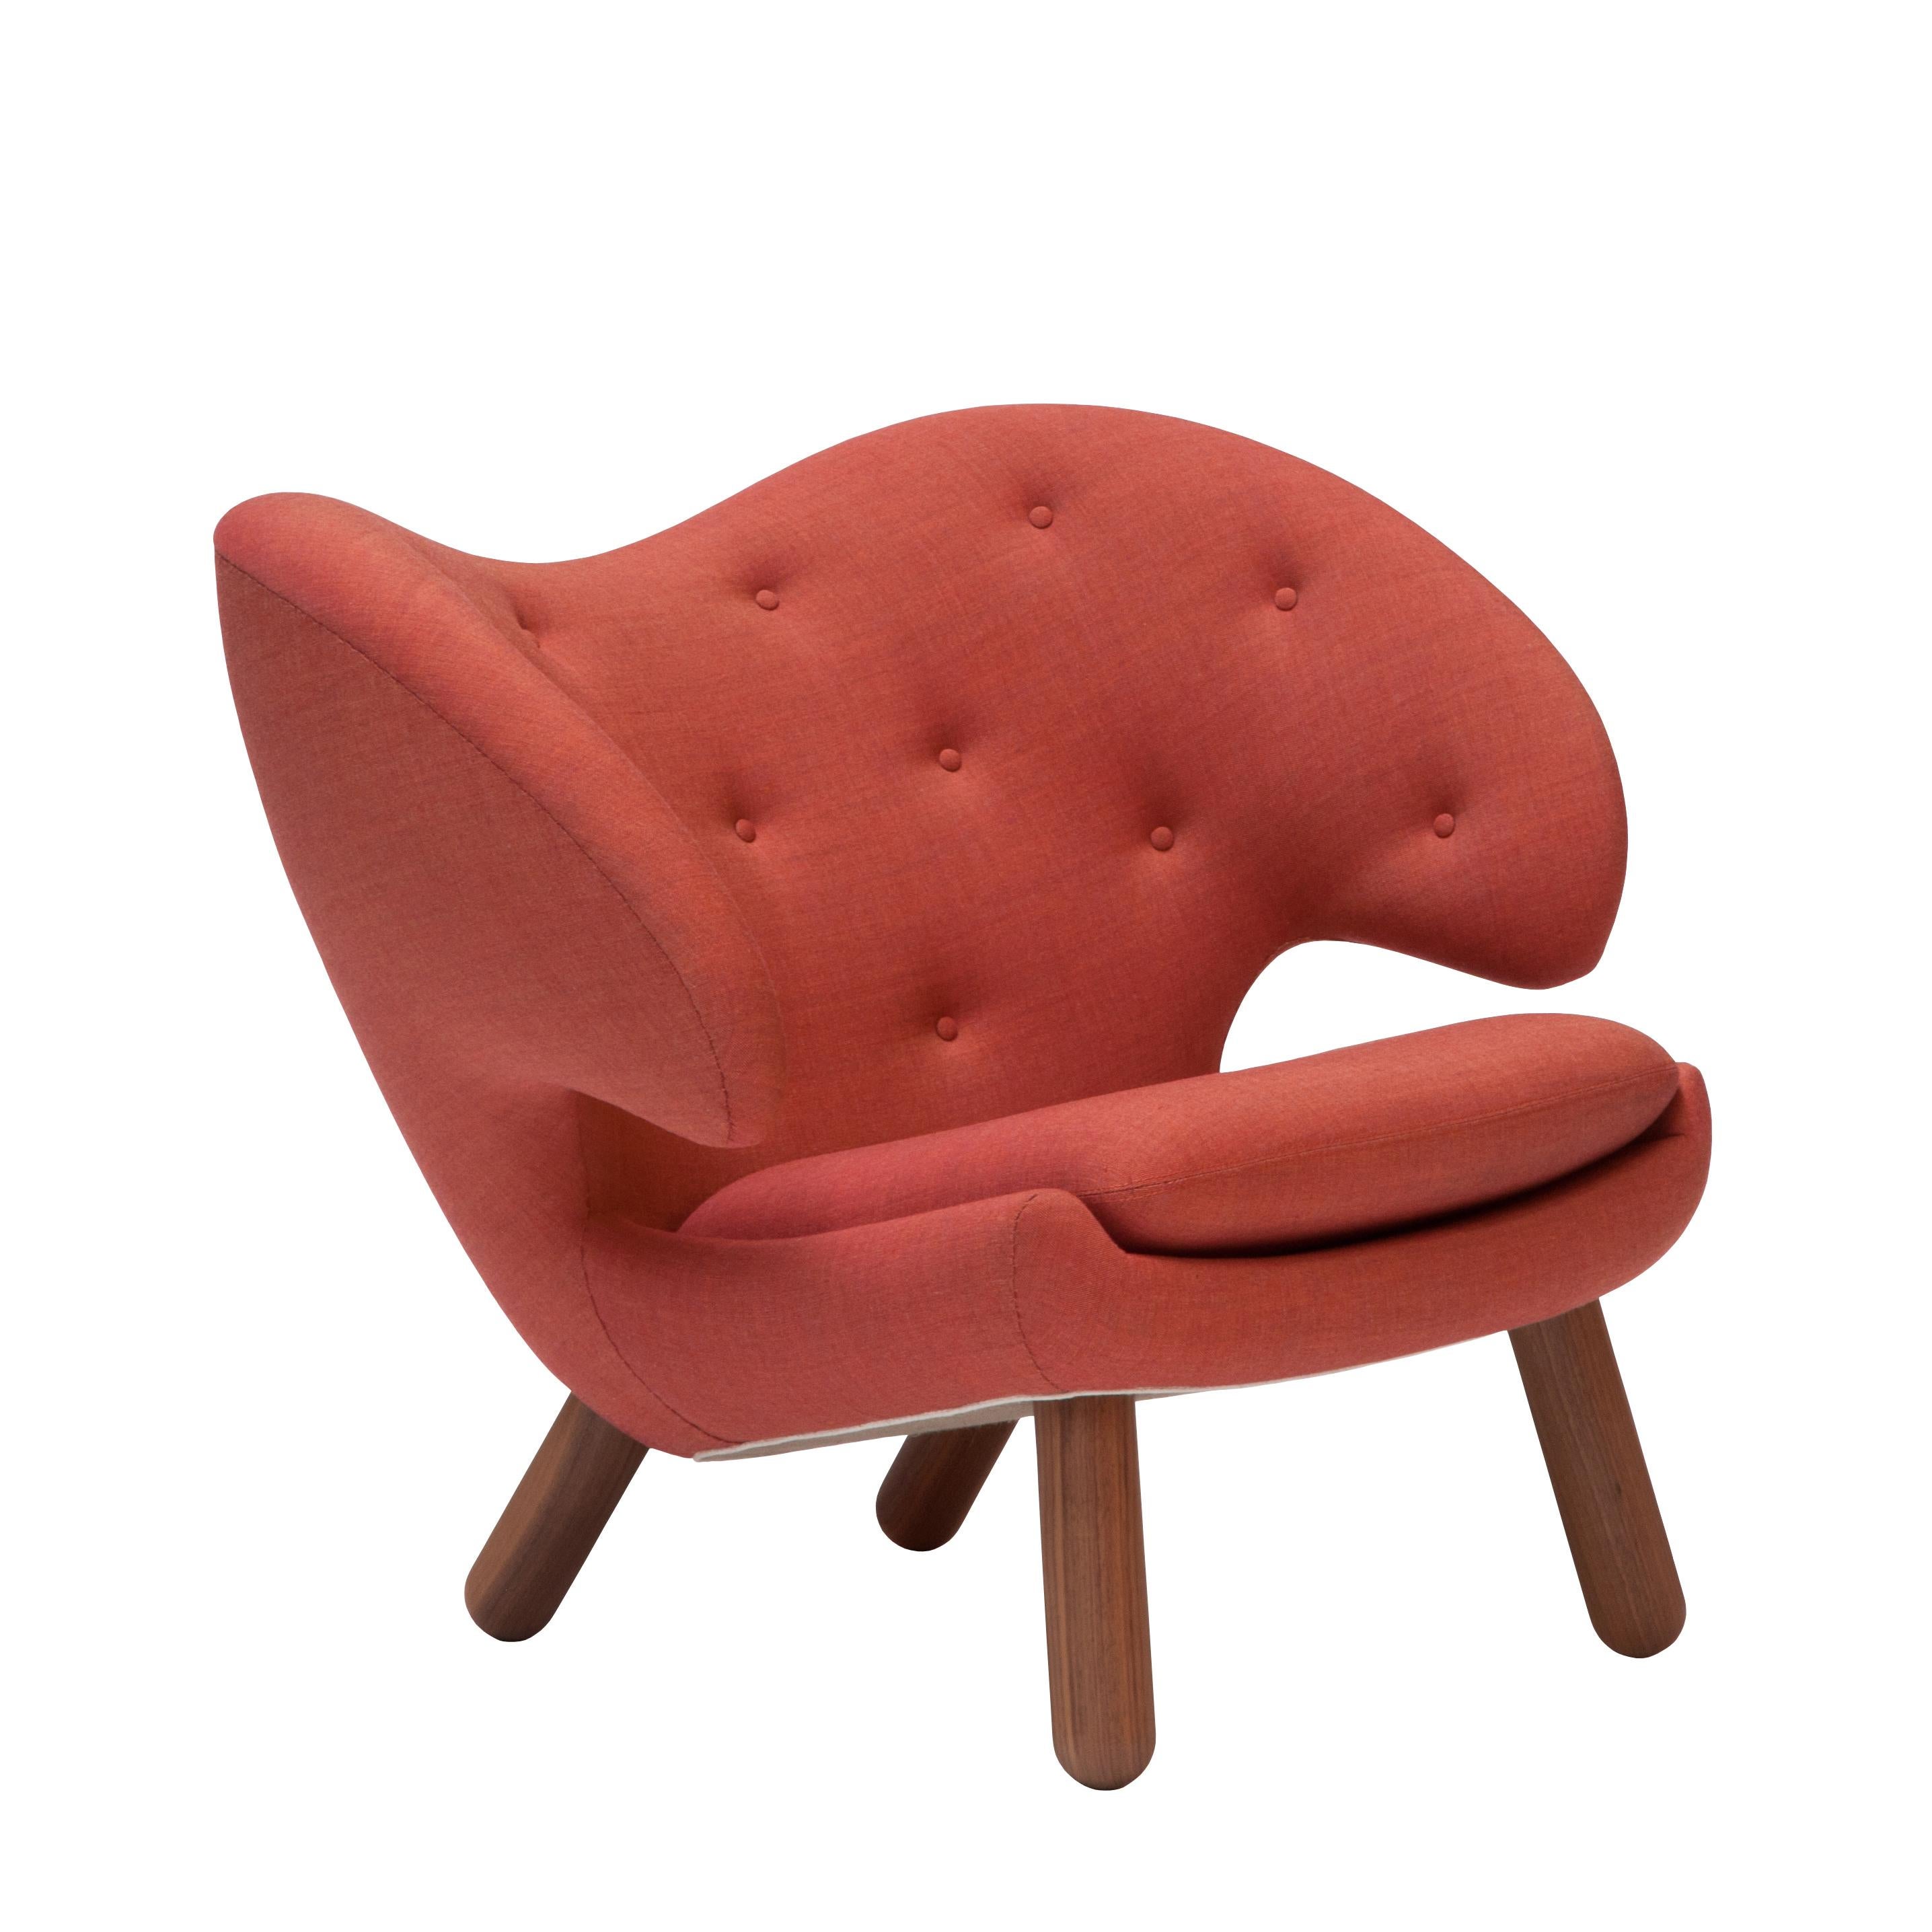 Wood Finn Juhl Pelican Chair Upholstered in Red Kvadrat Remix Fabric